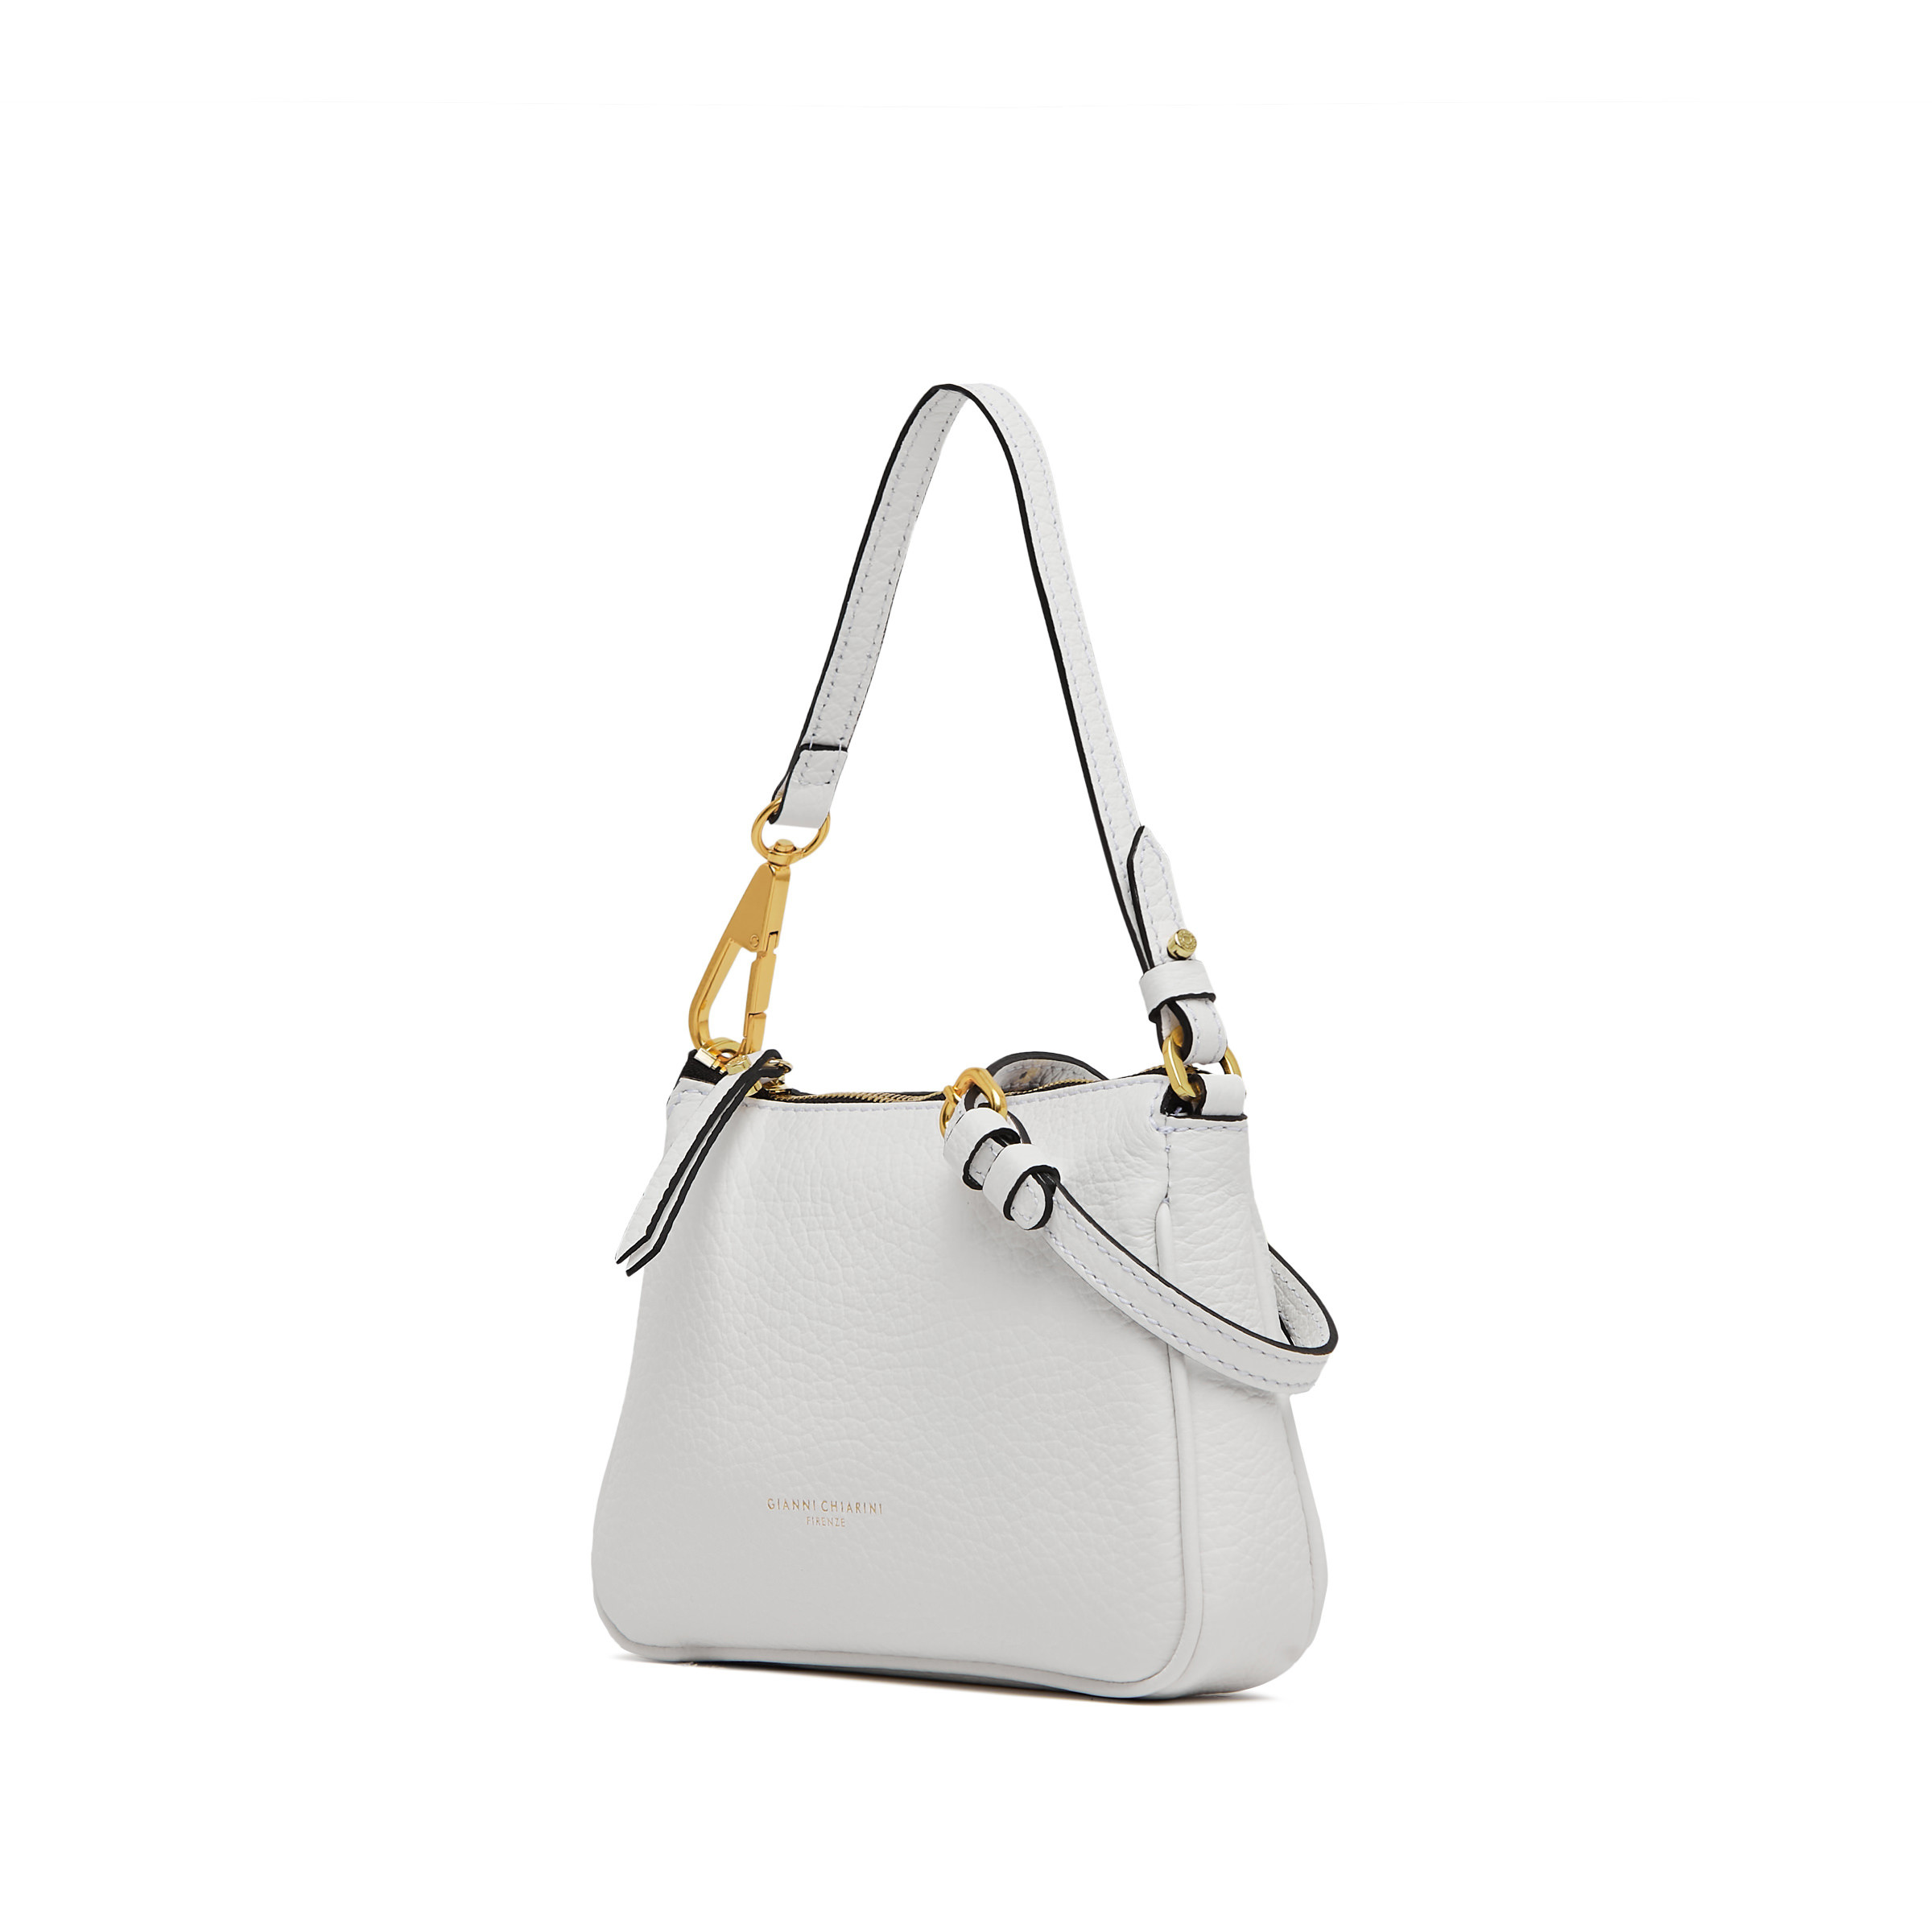 Gianni Chiarini - Brooke bag in leather, White, large image number 1